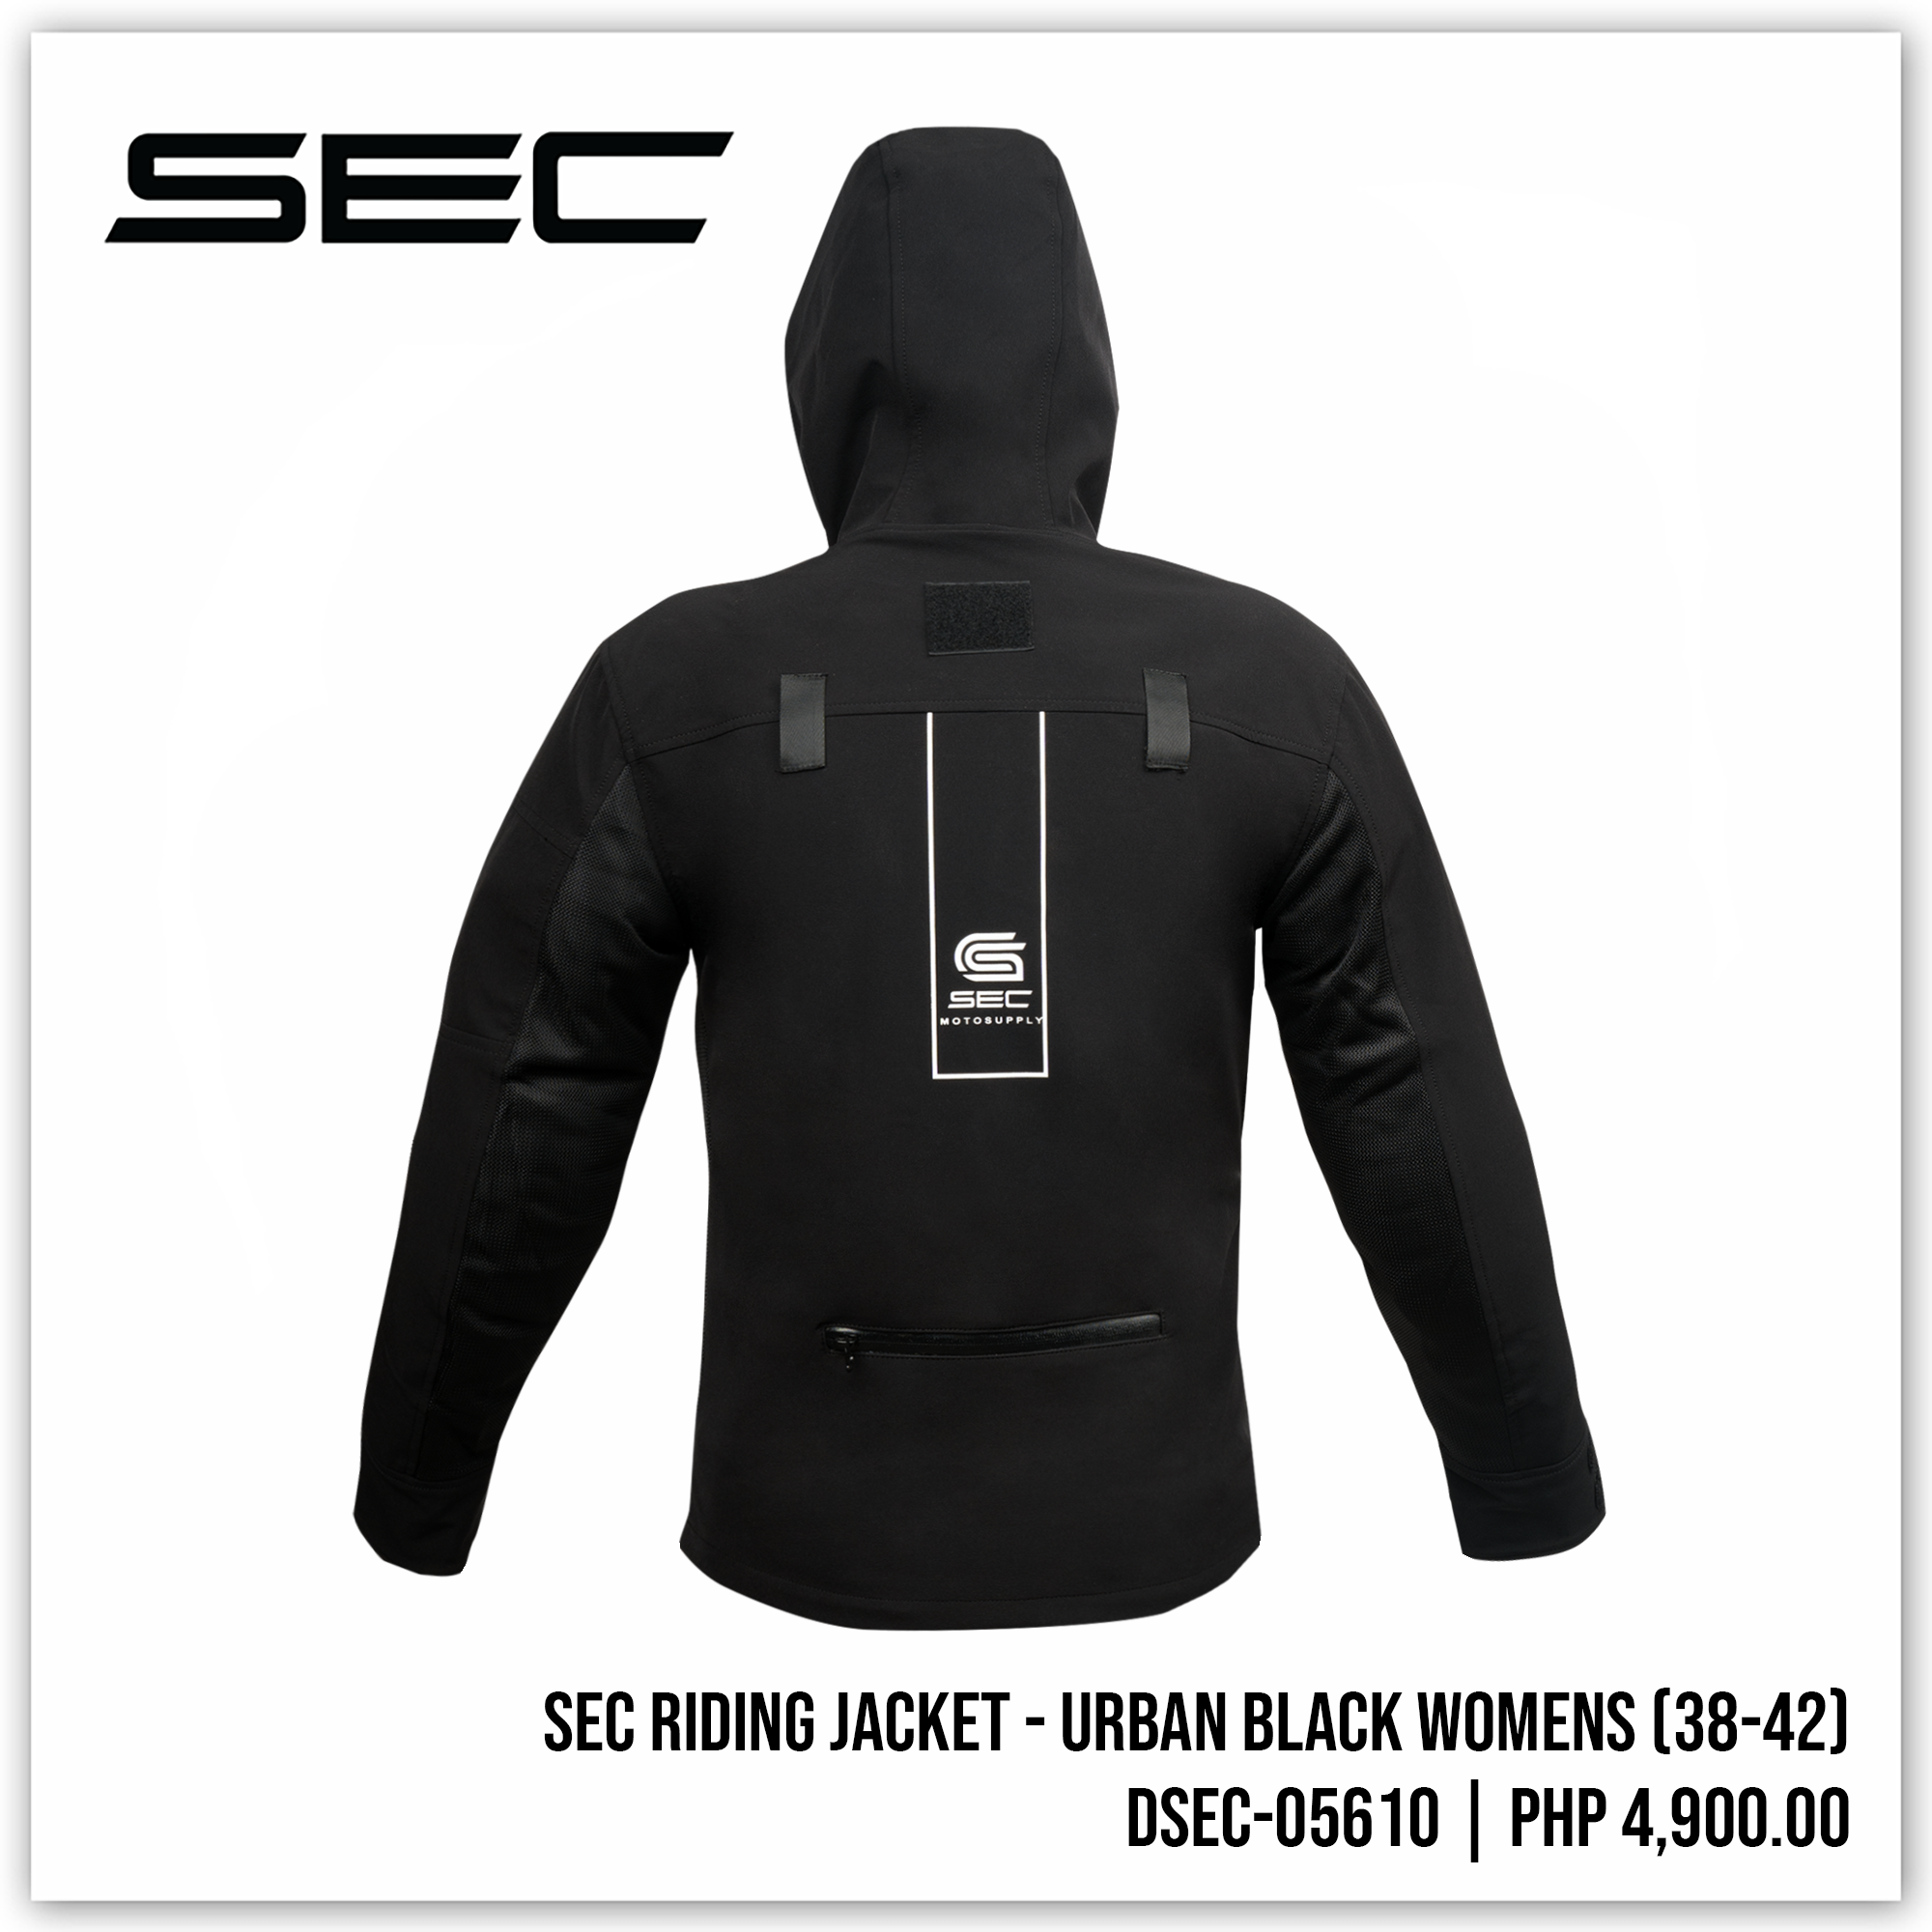 SEC Riding Jacket - Urban Black Womens